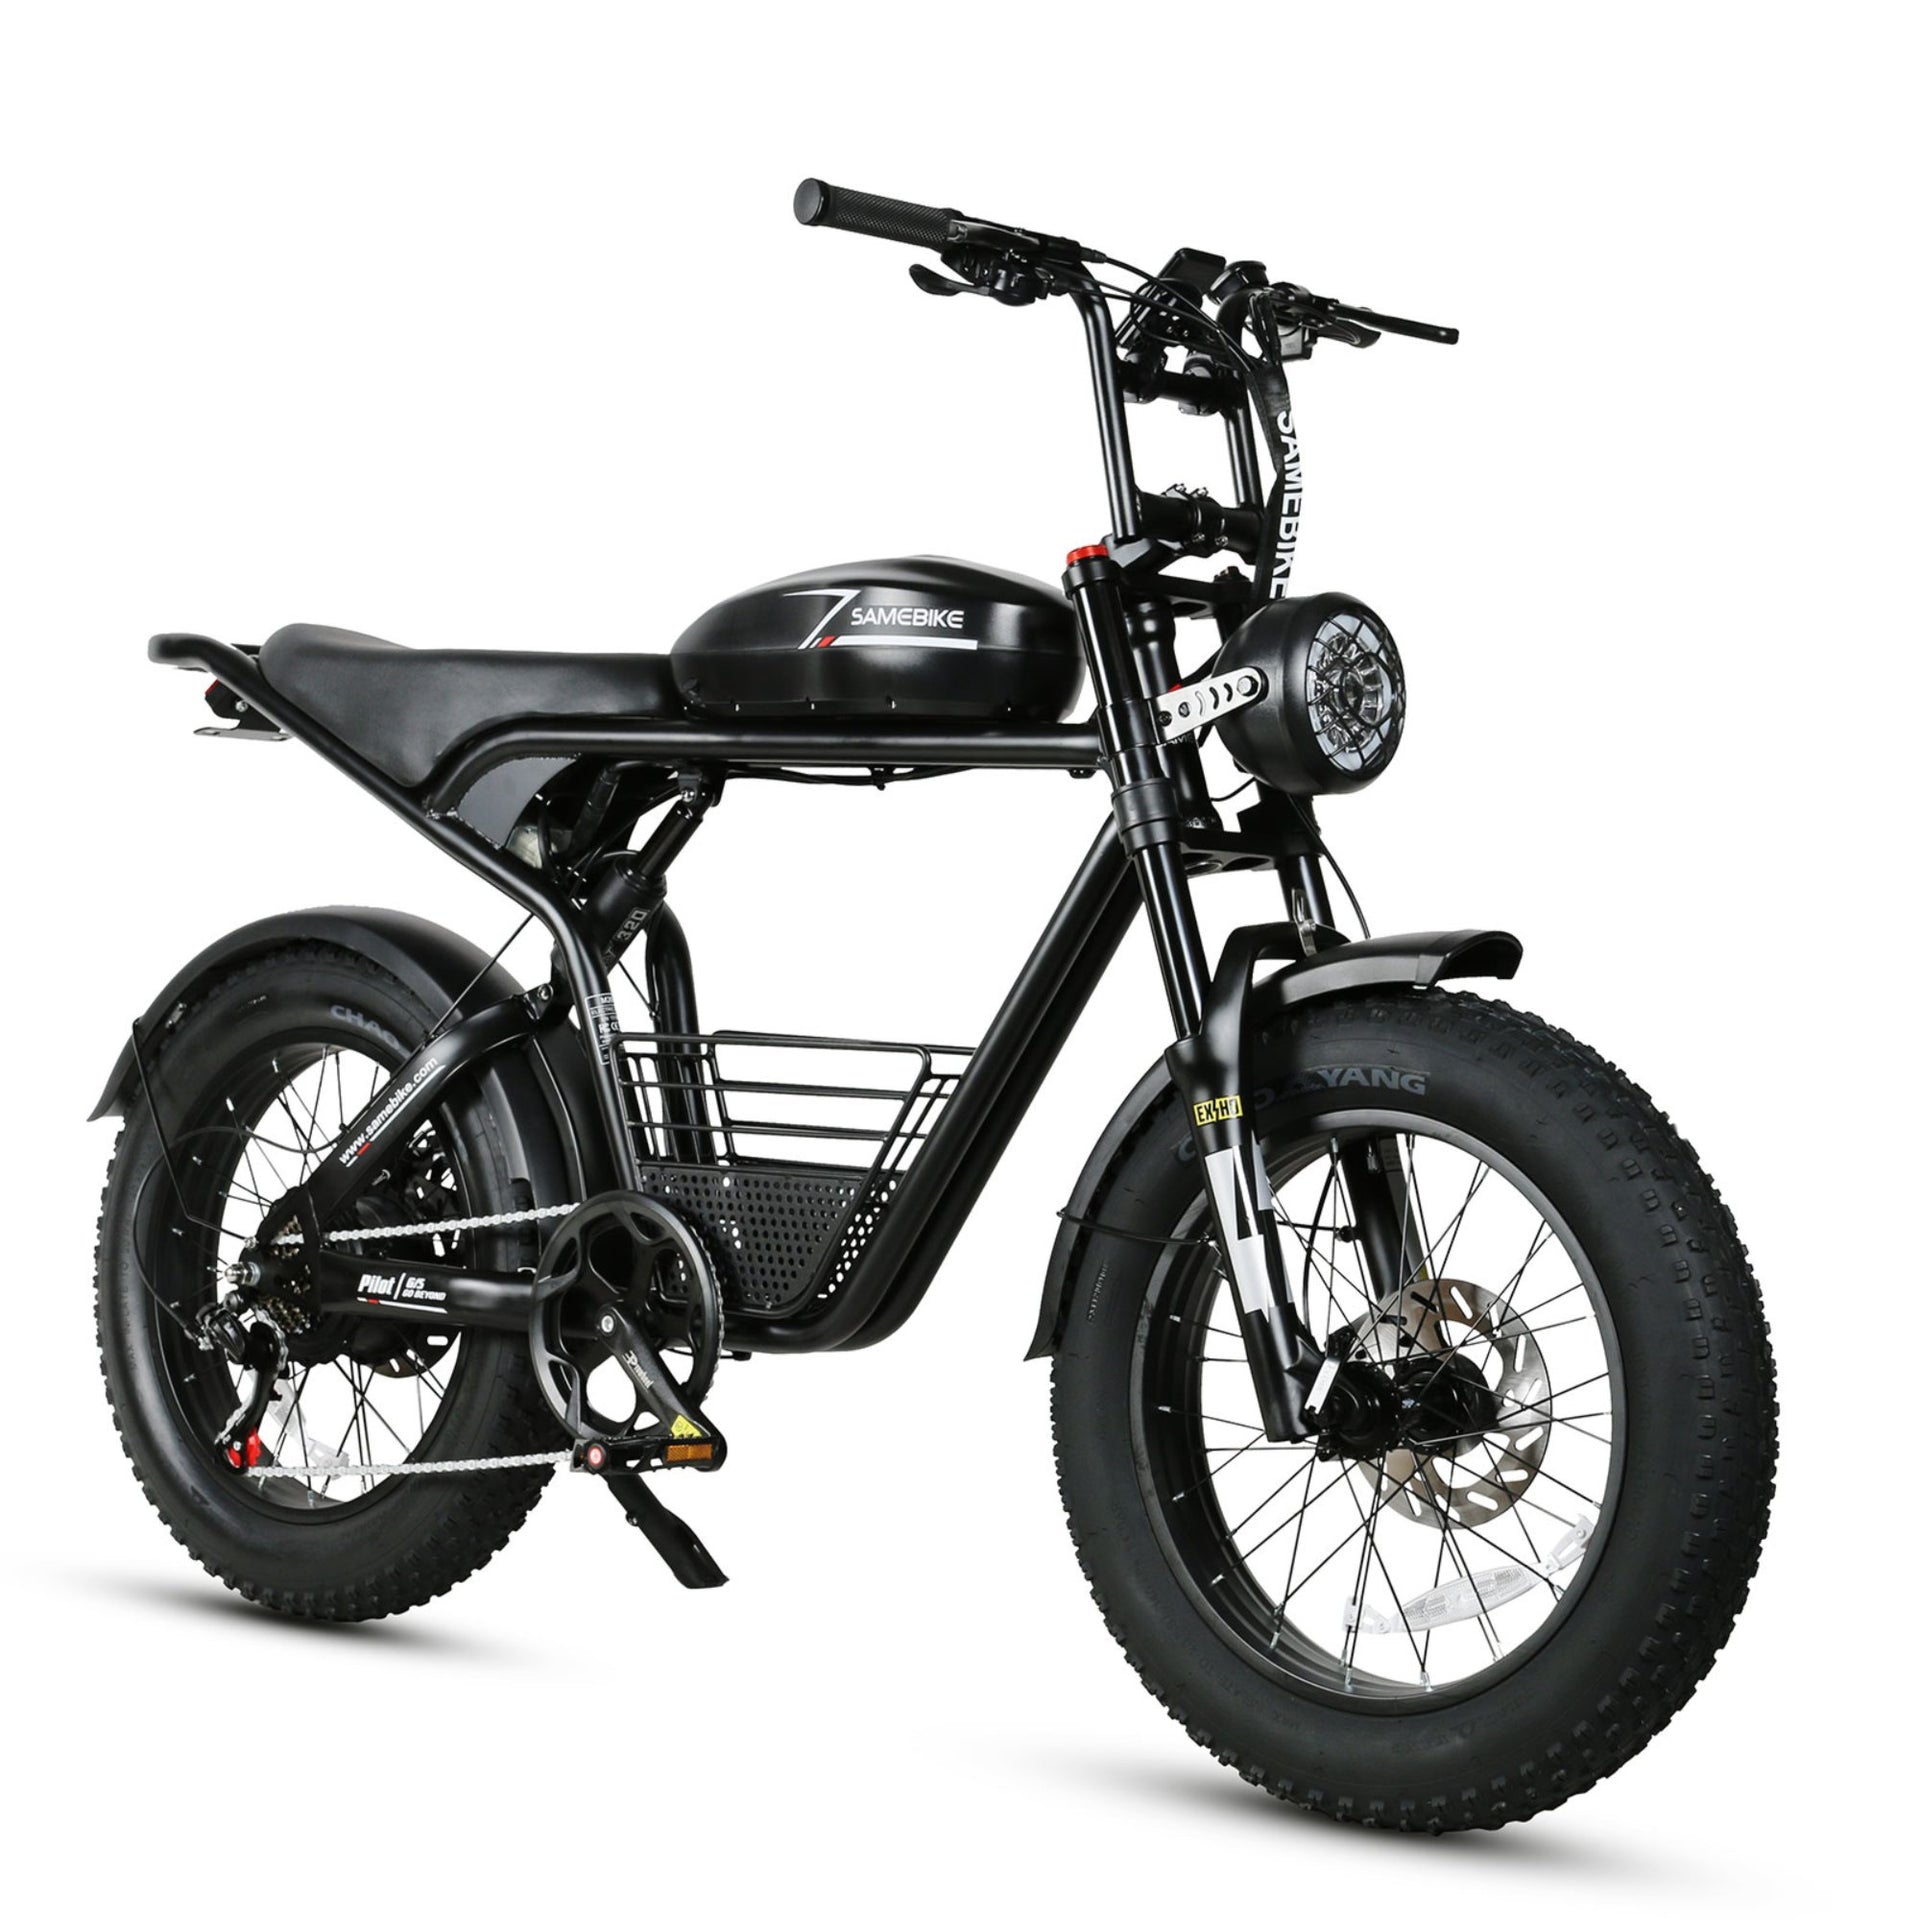 Electric Dirt Bike for Adult 1,000W Full-Suspension - SAMEBIKE Pilot, Black